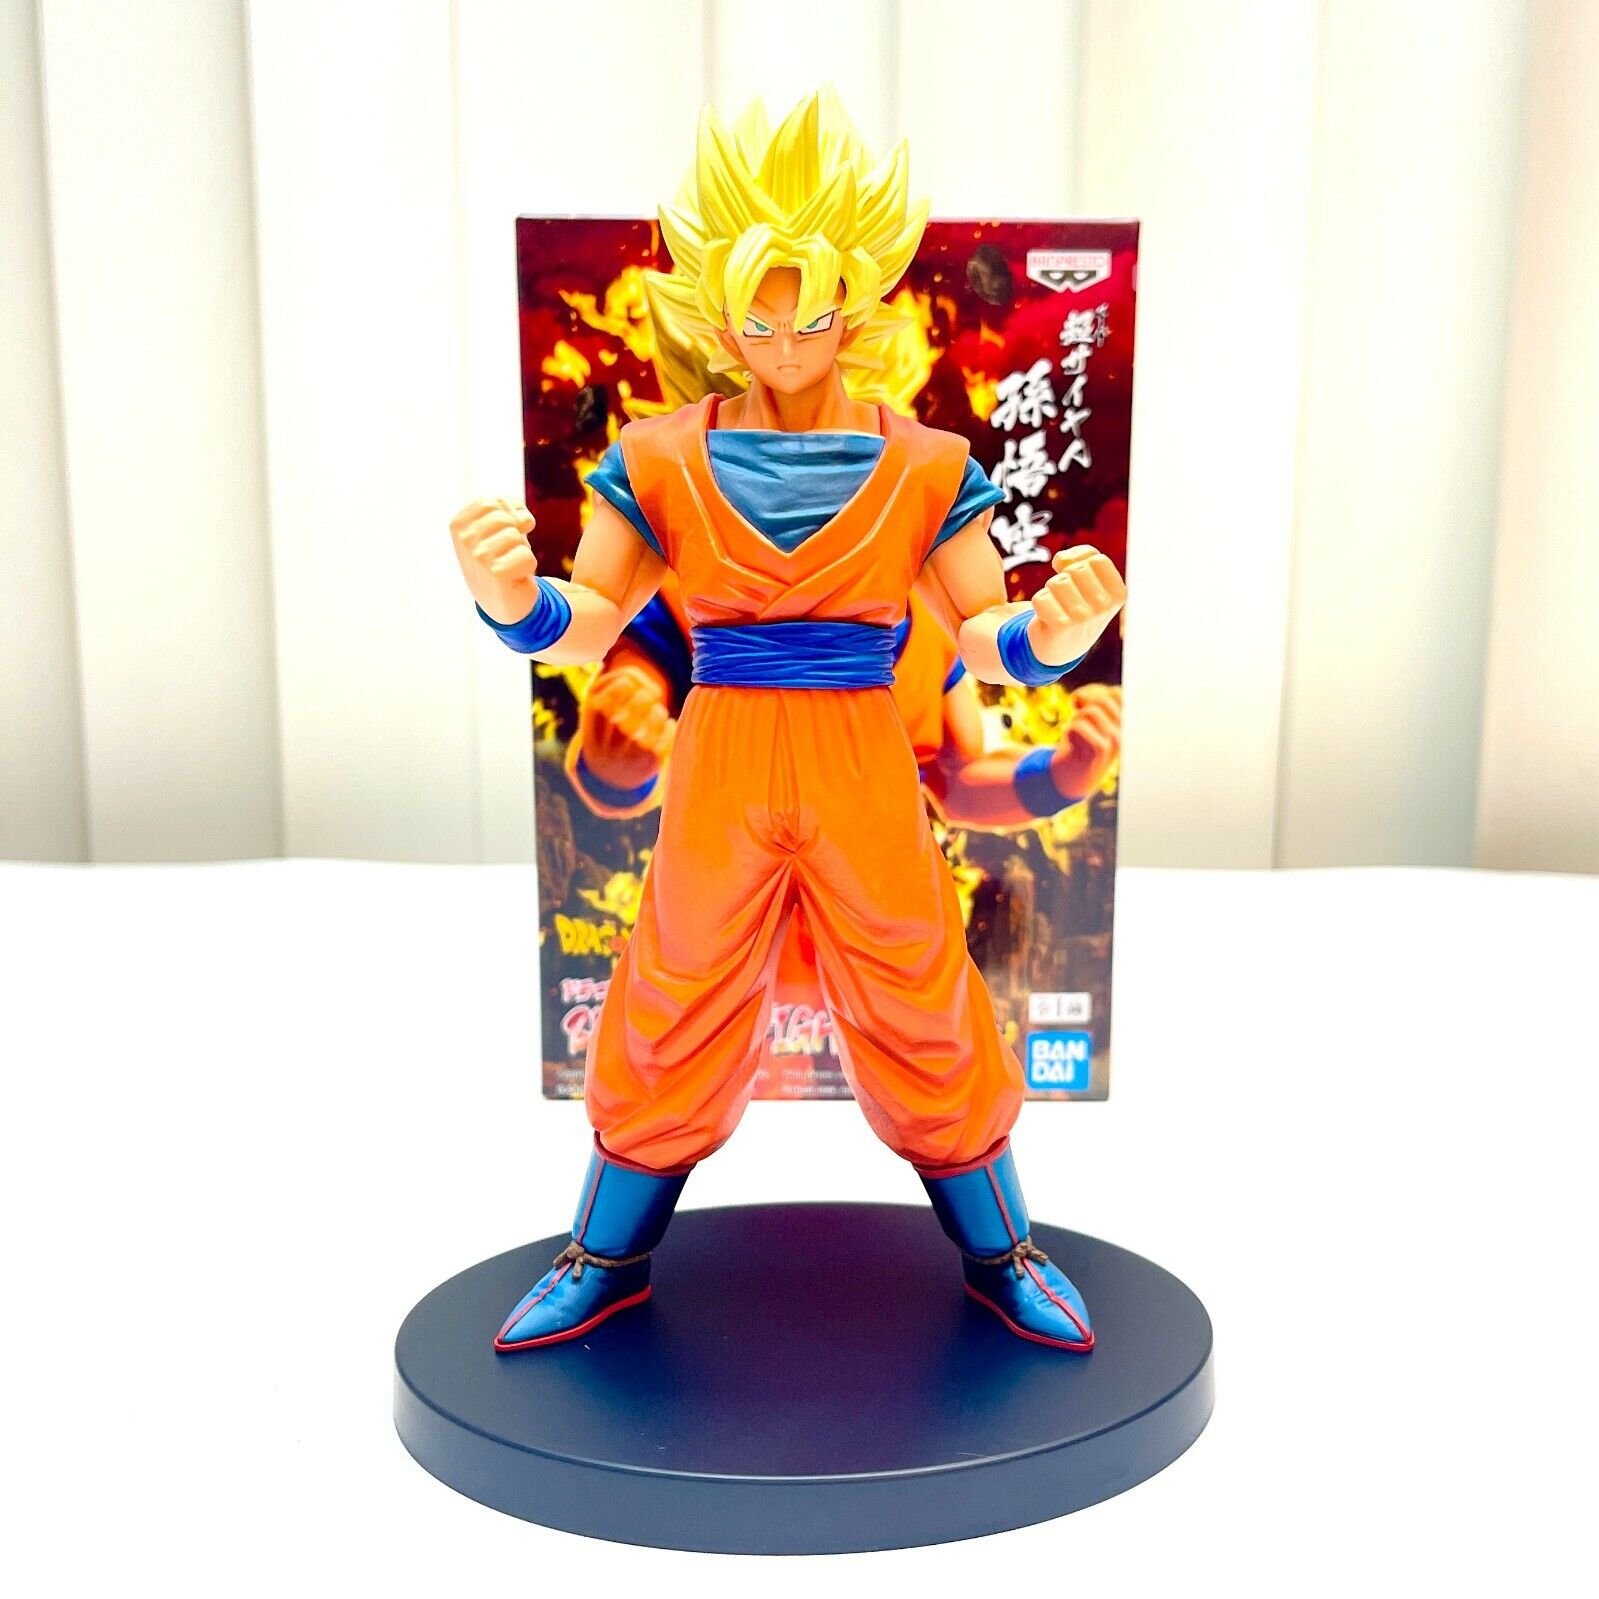 Banpresto Dragon Ball Z Super Burning Fighters V1 Figure Statue Toy Goku BP17847